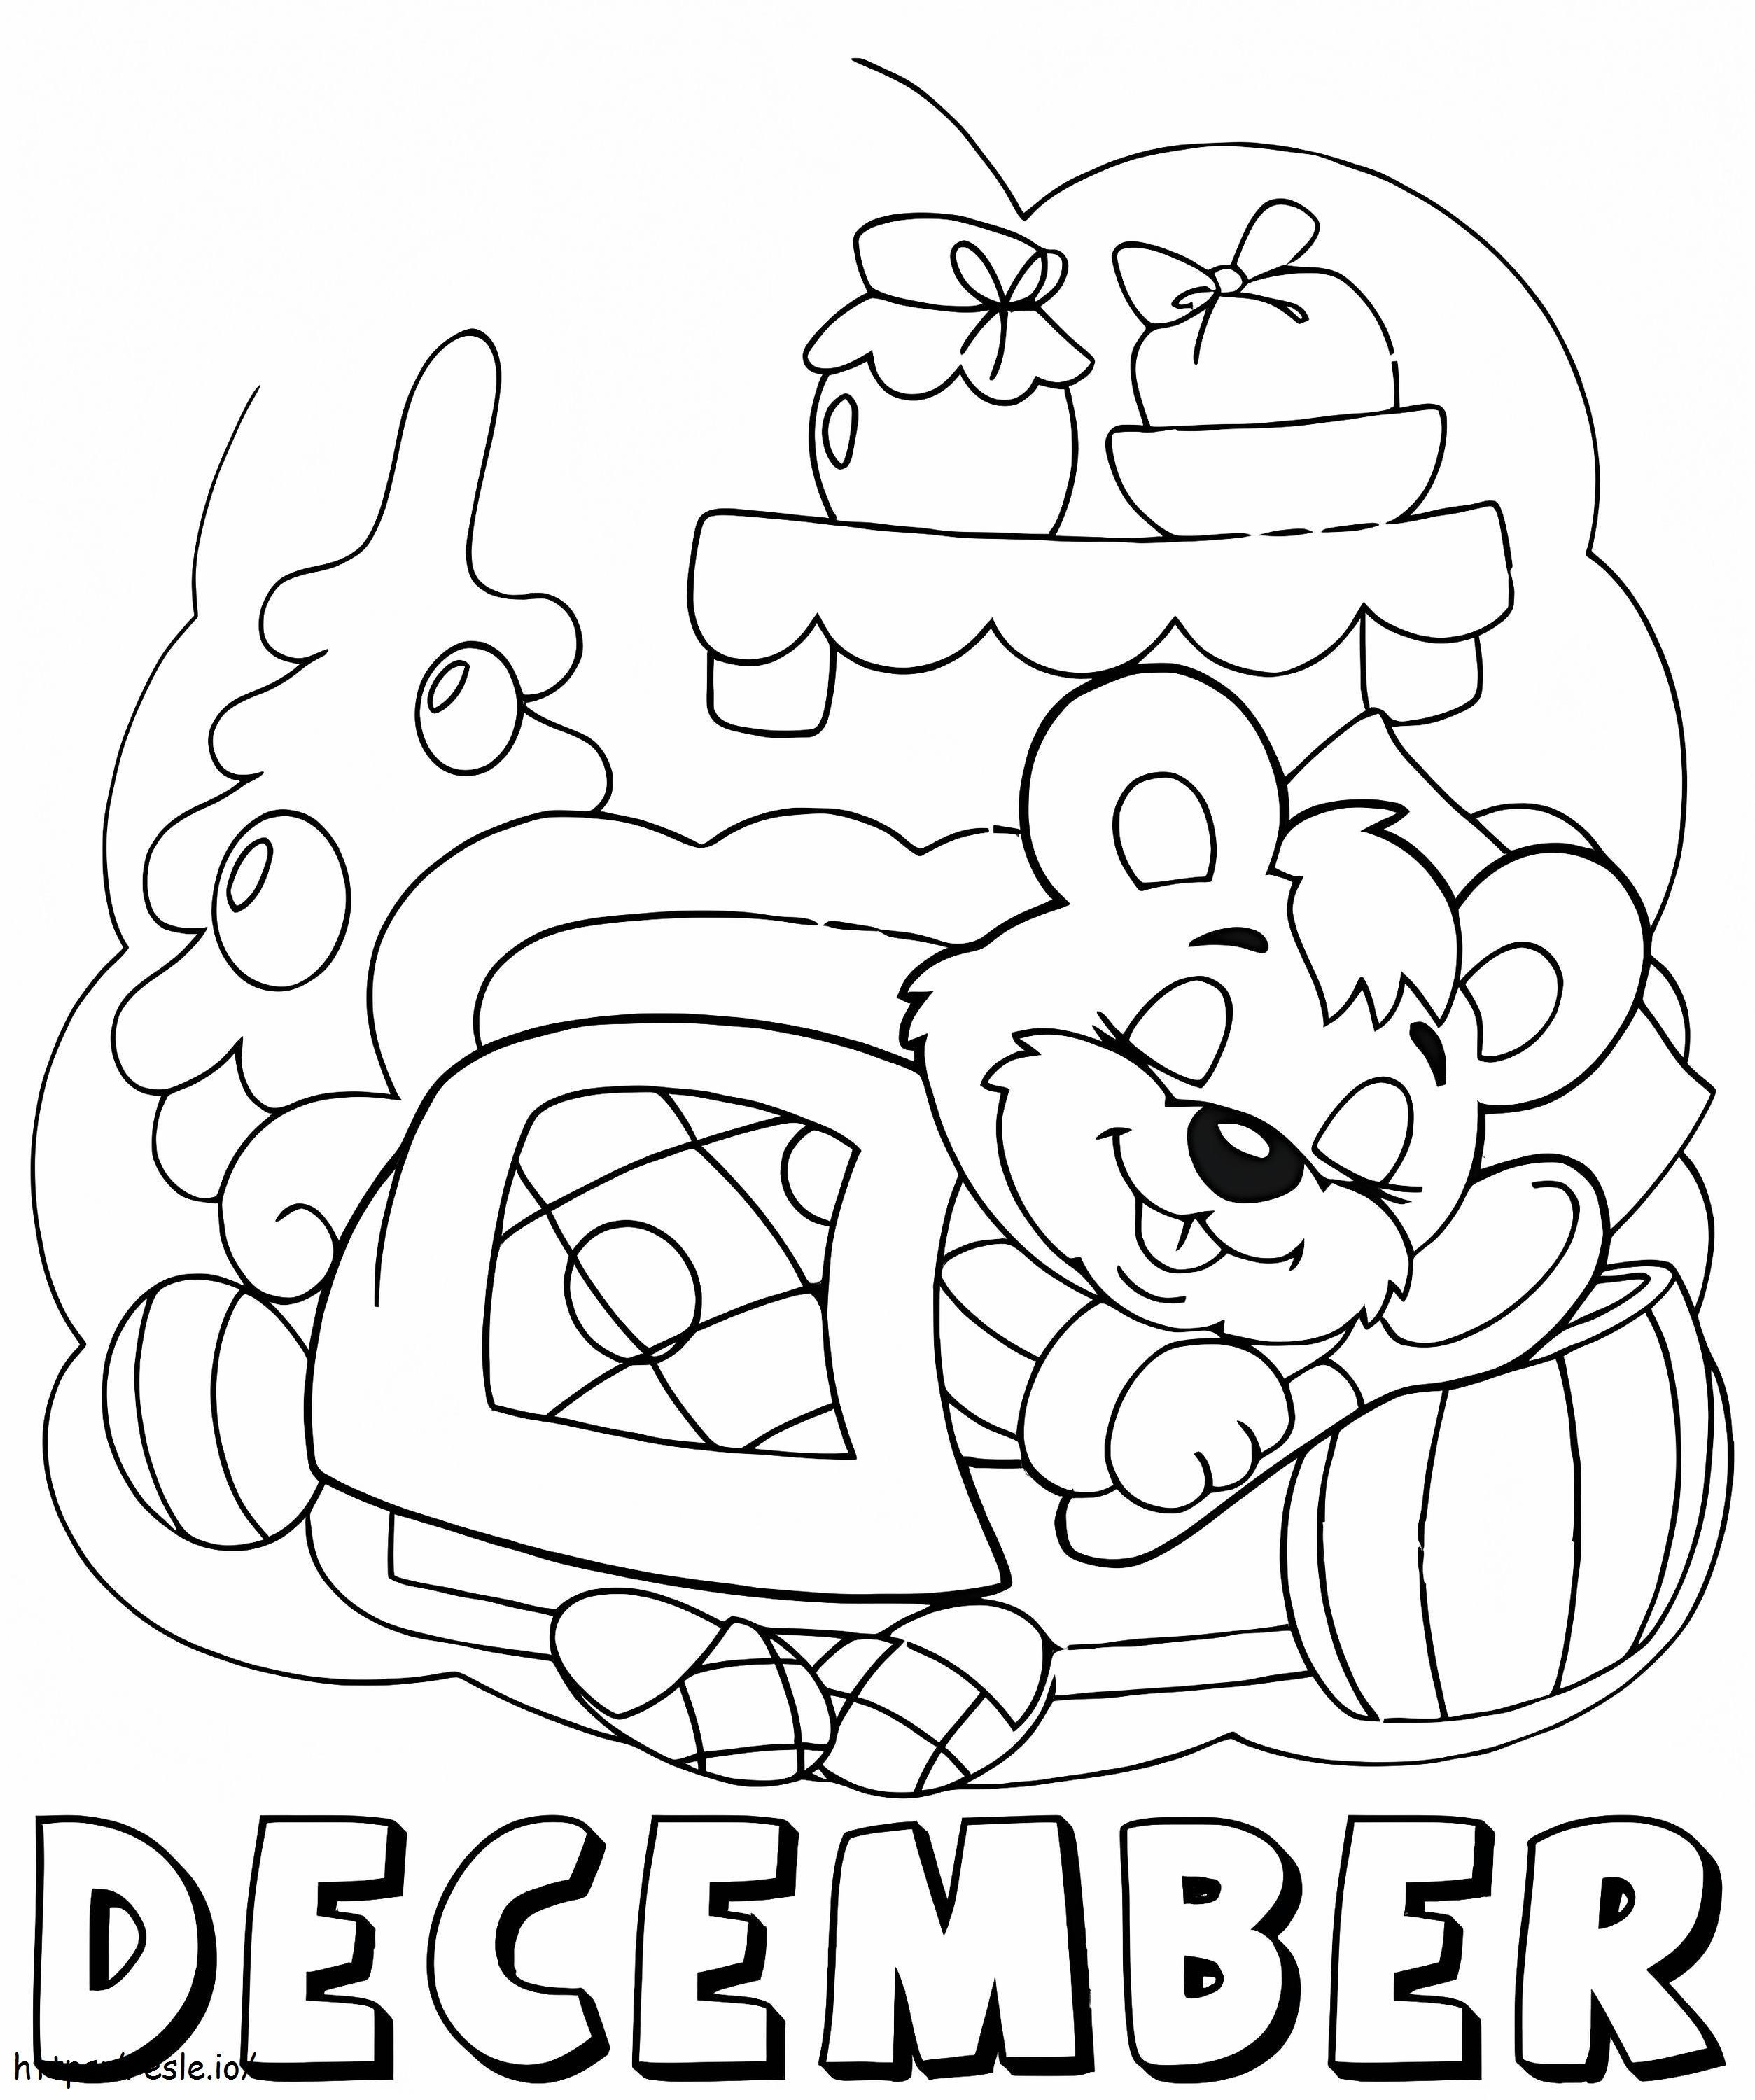 December Sleeping Squirrel coloring page